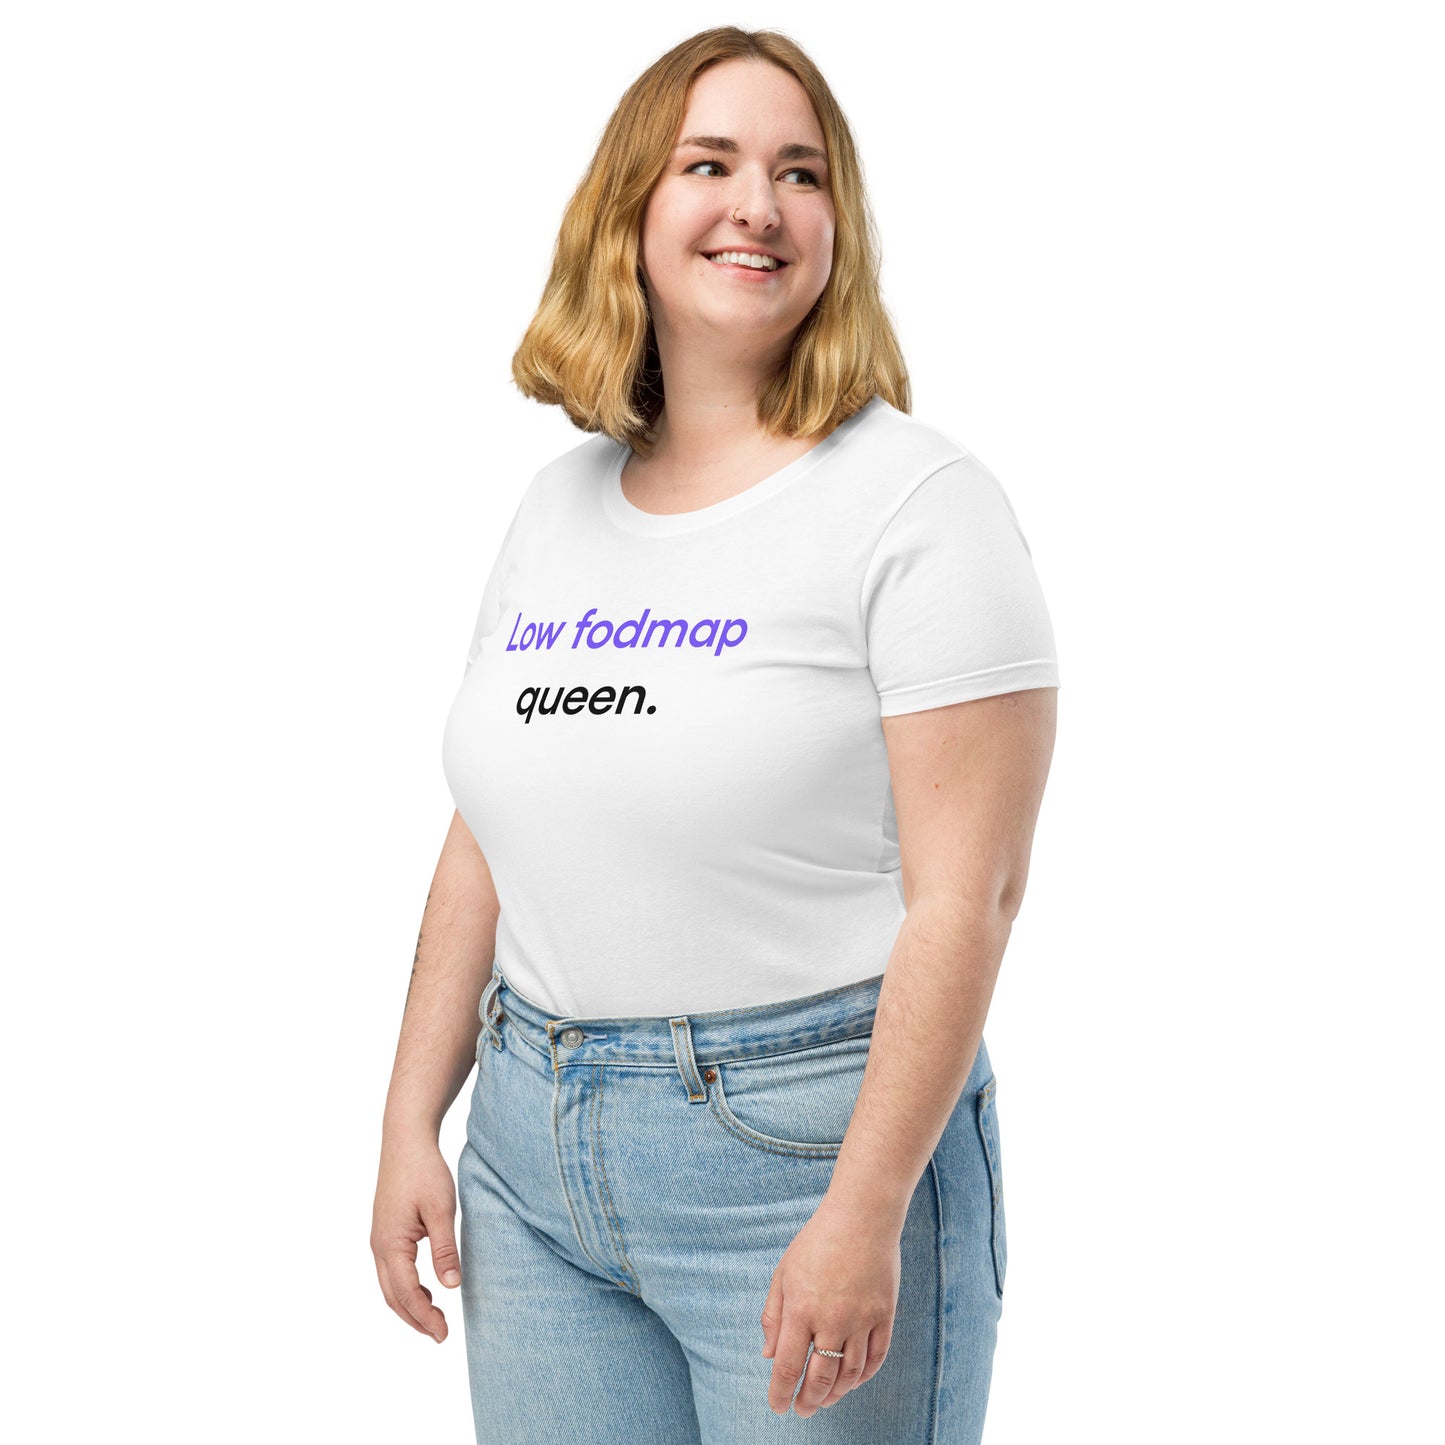 Low fodmap queen | Women’s fitted t-shirt